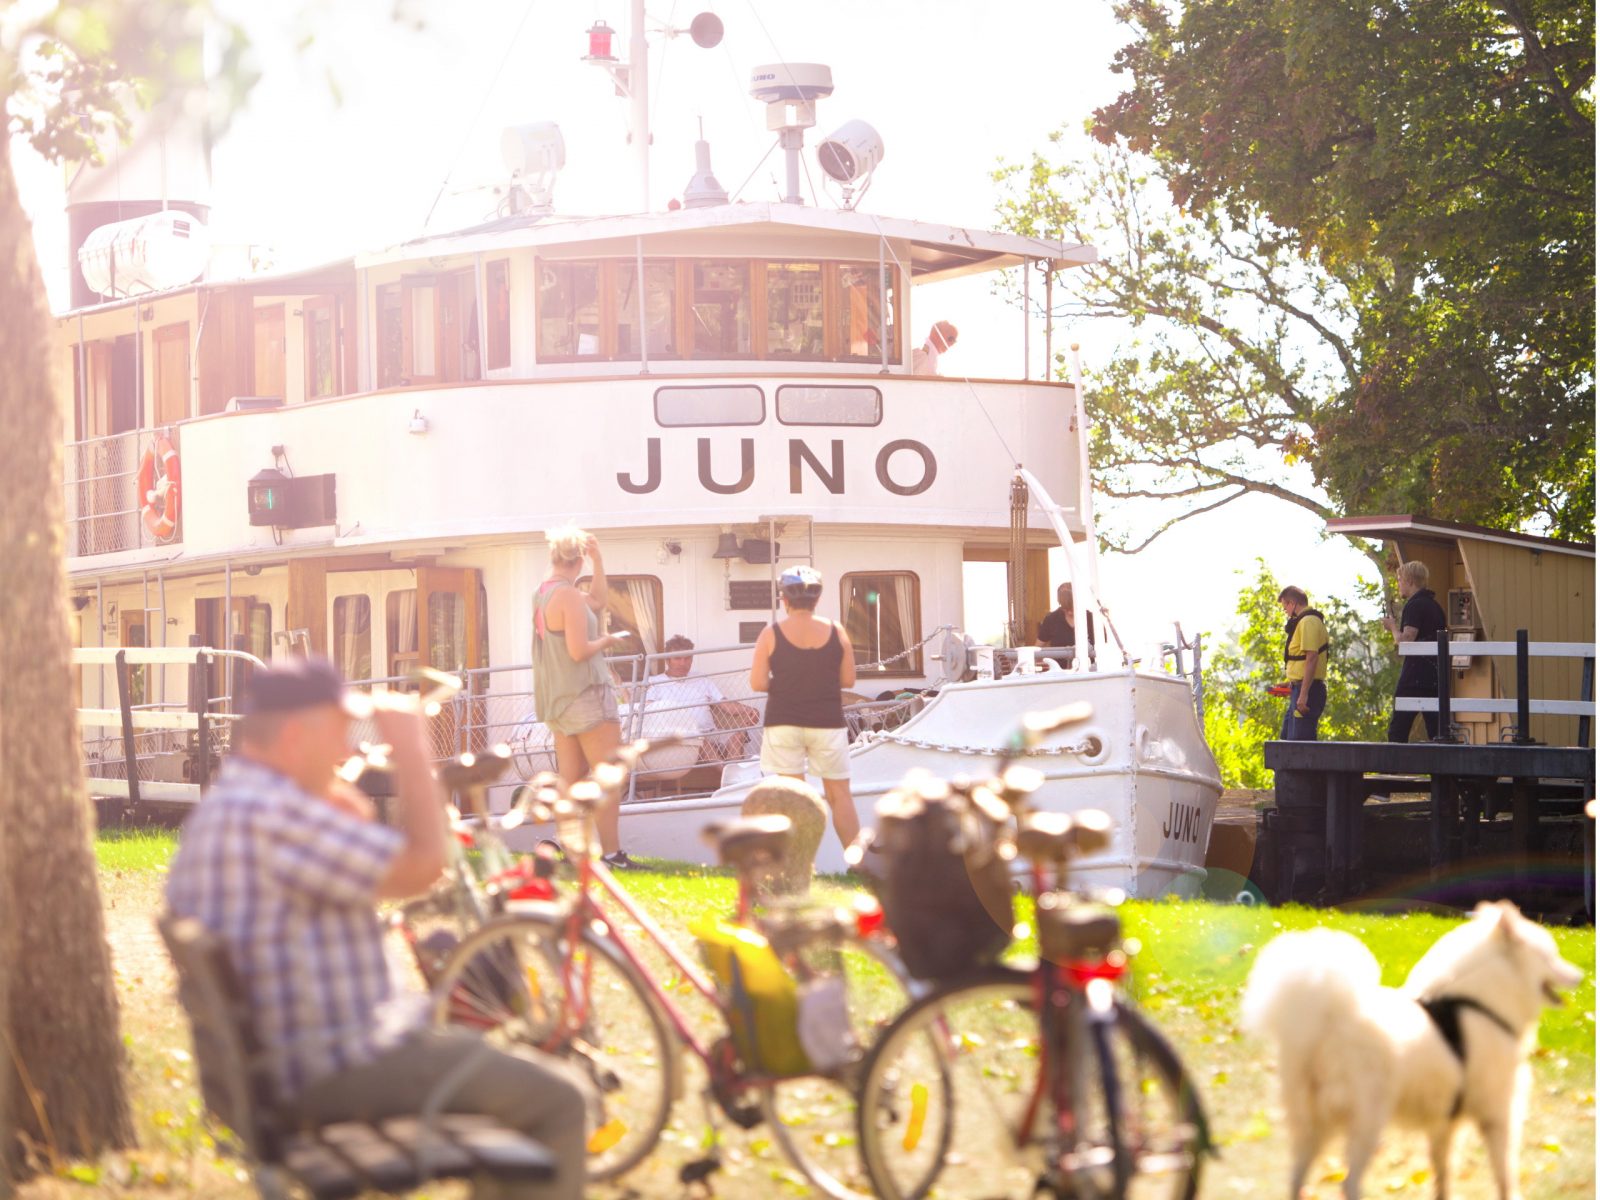 juno-göta-kanal-sweden-by-bike